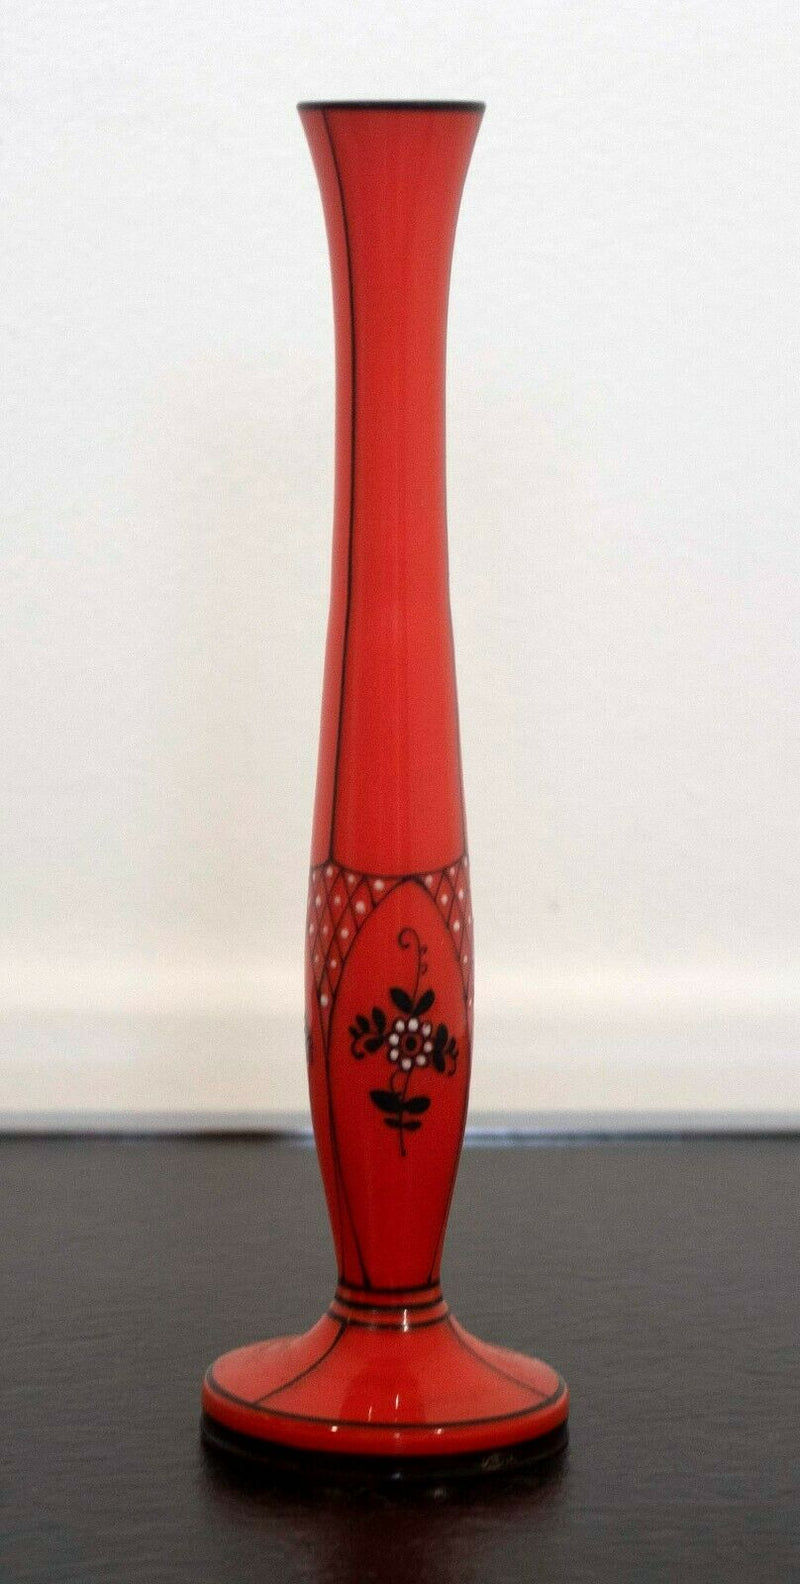 Gallo Slovakia Orange Candlestick with Flower Design